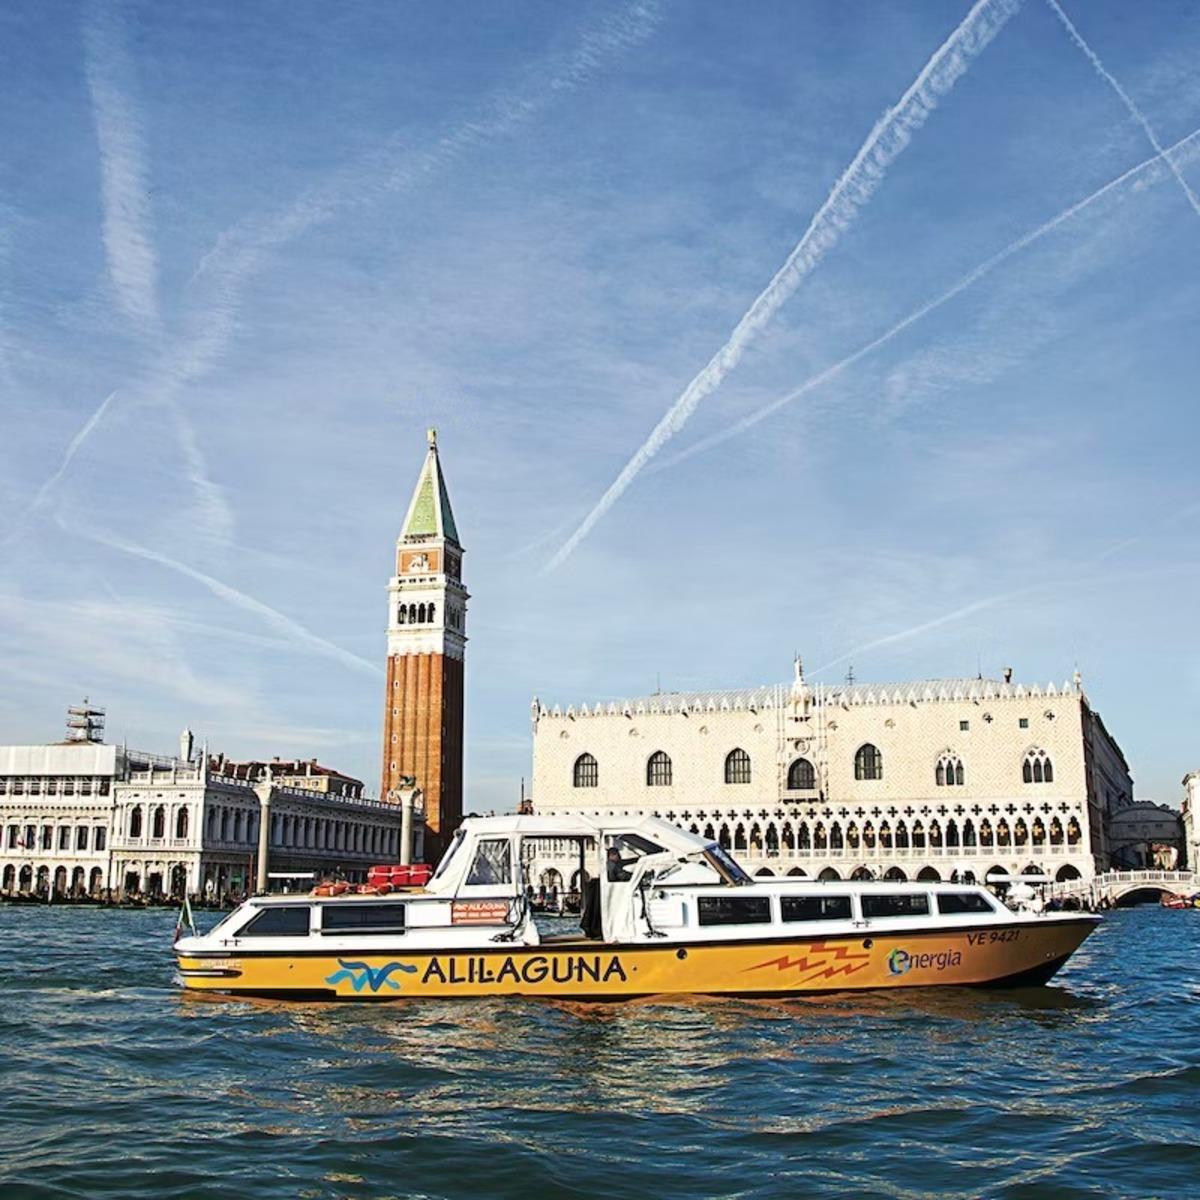 Return Transfer. Marco Polo Airport - Venice